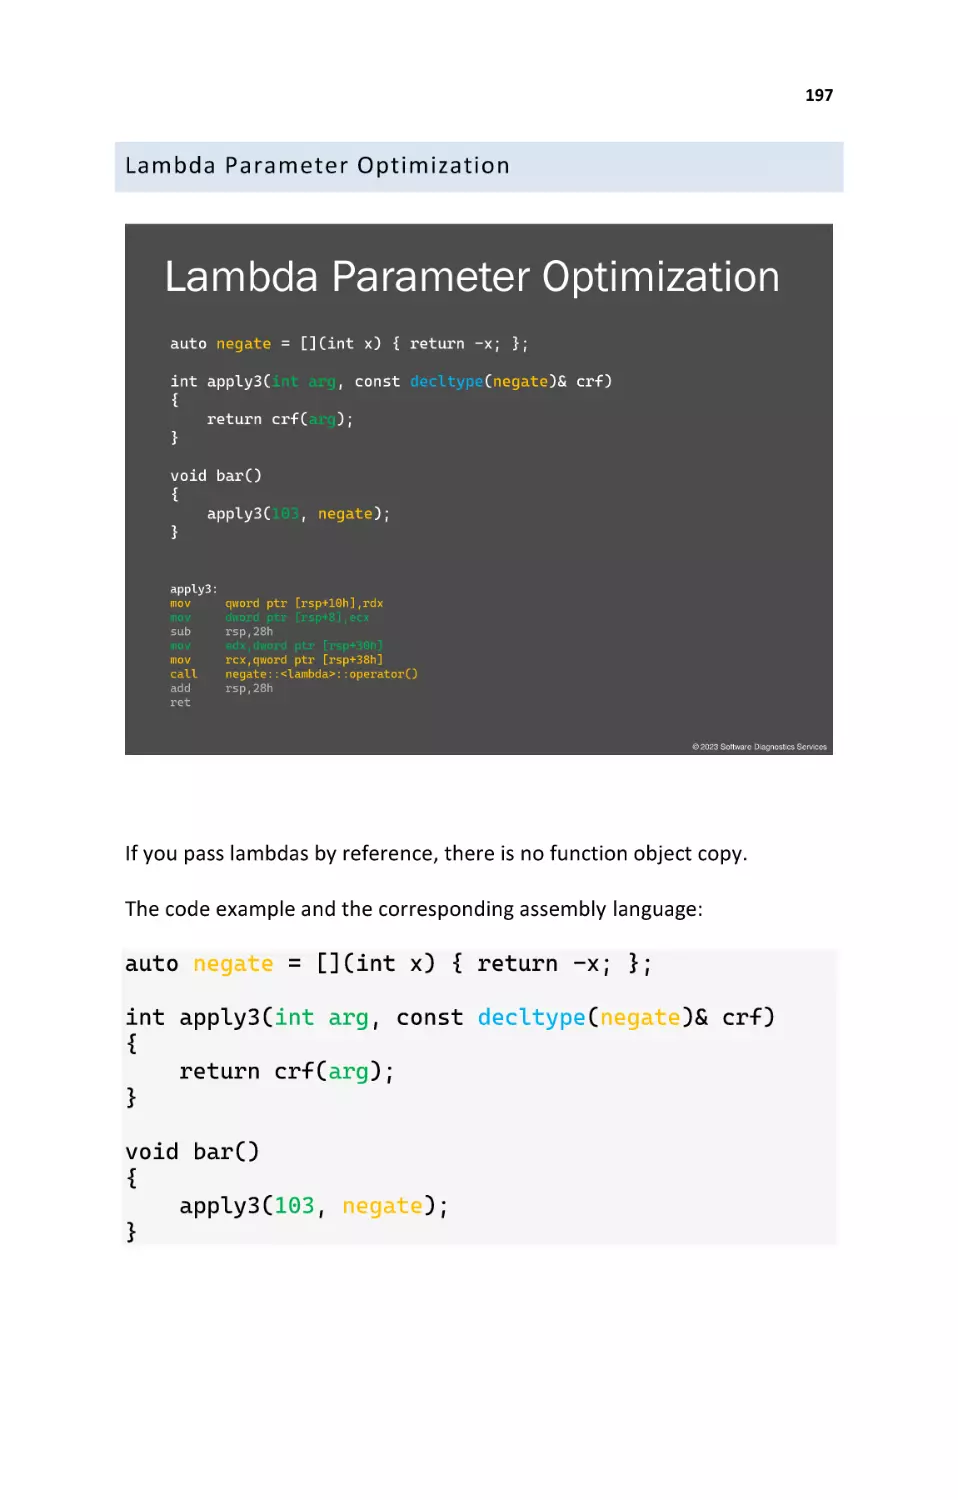 Lambda Parameter Optimization